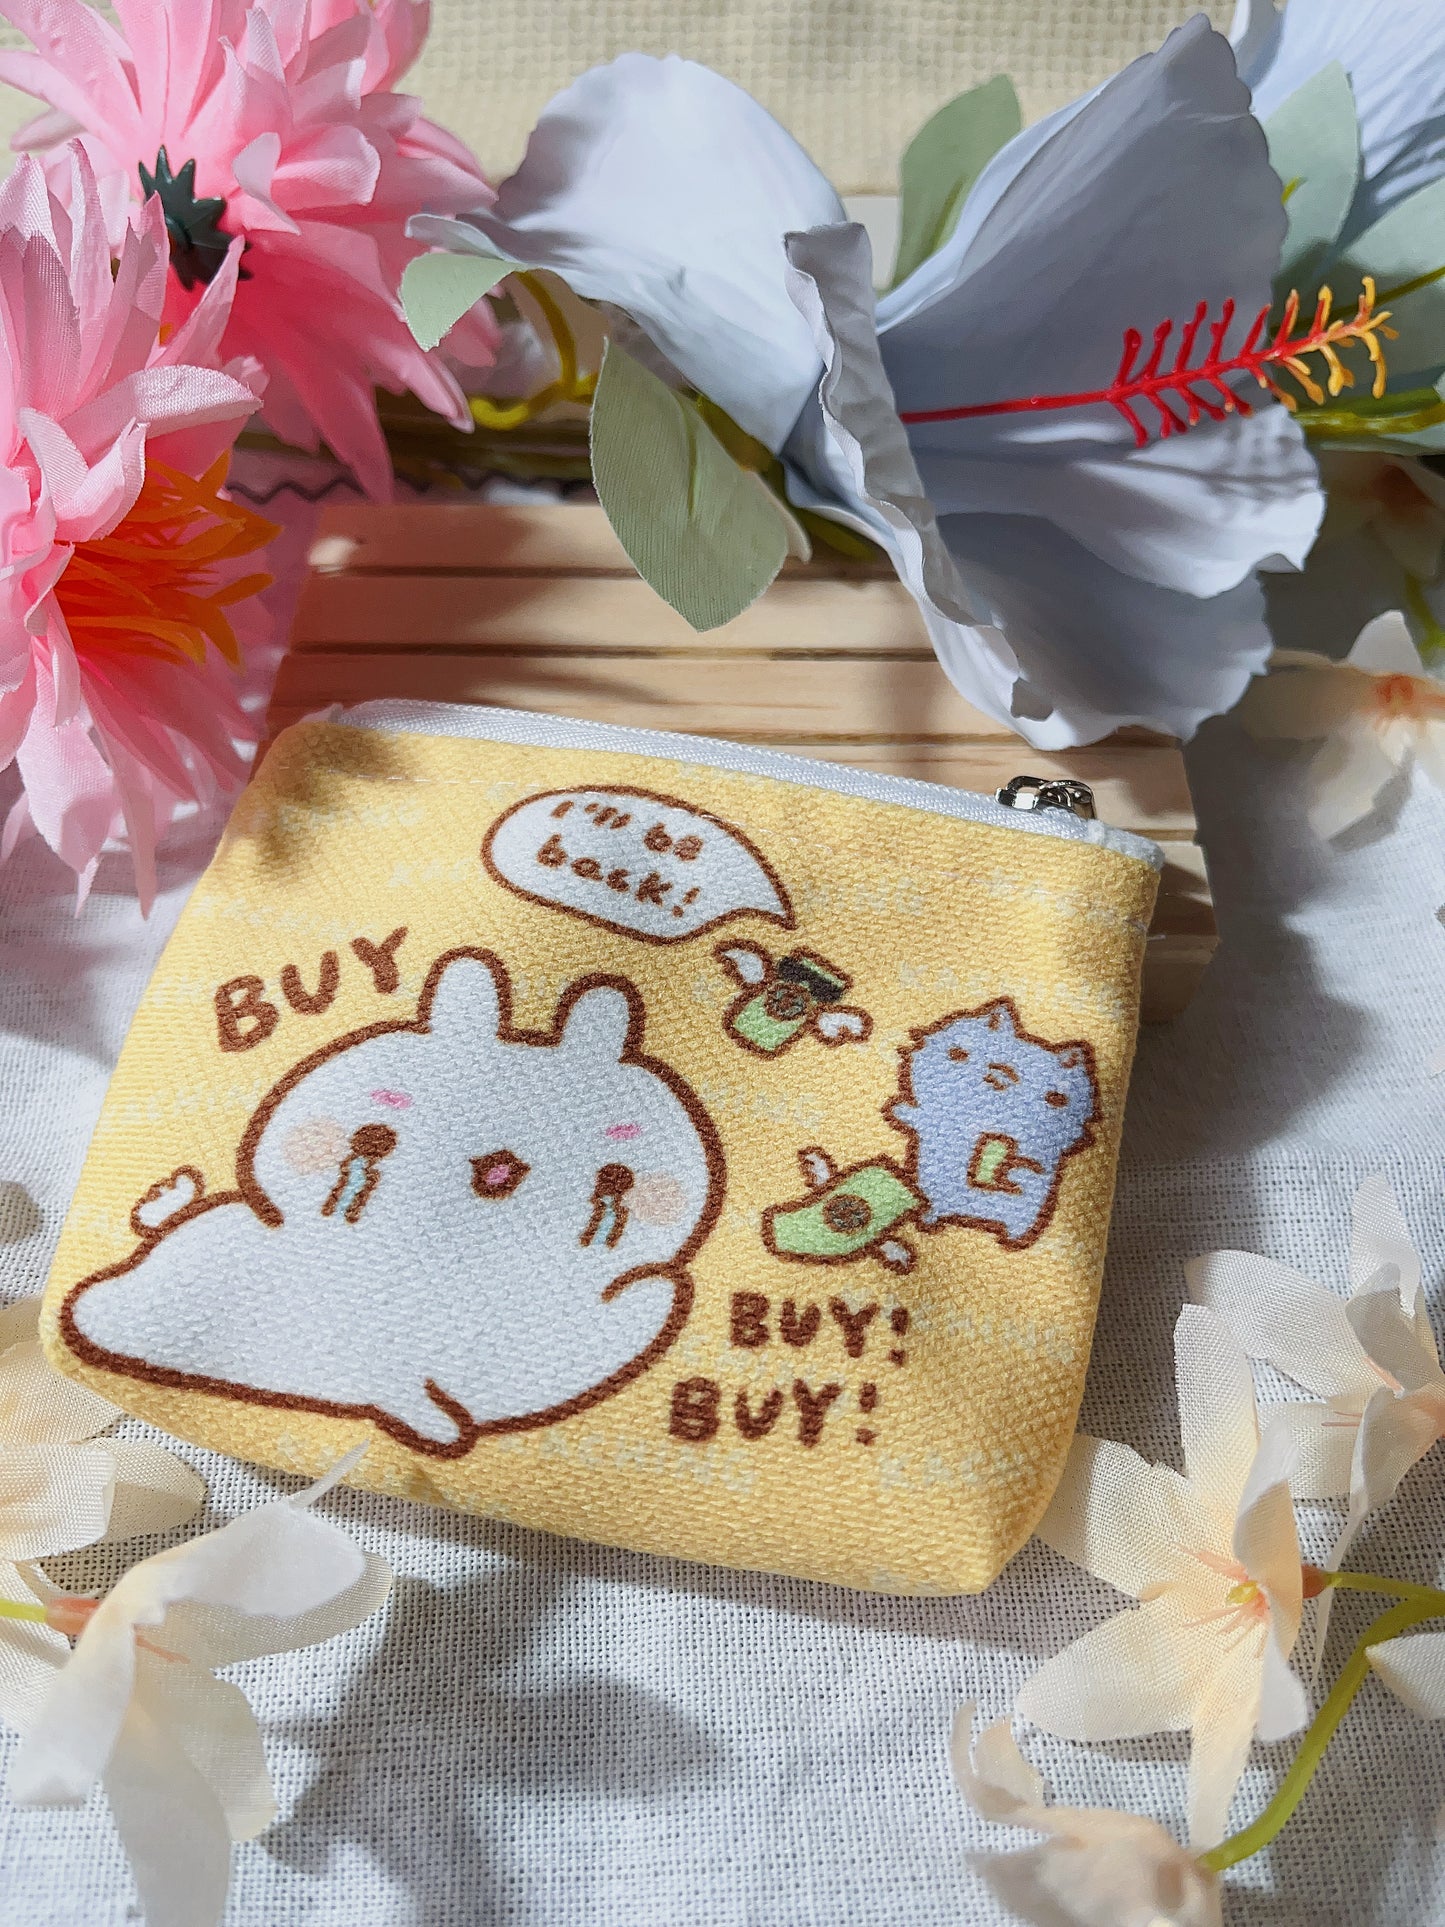 Buy Buy Buy! - Cute Coin Pouch